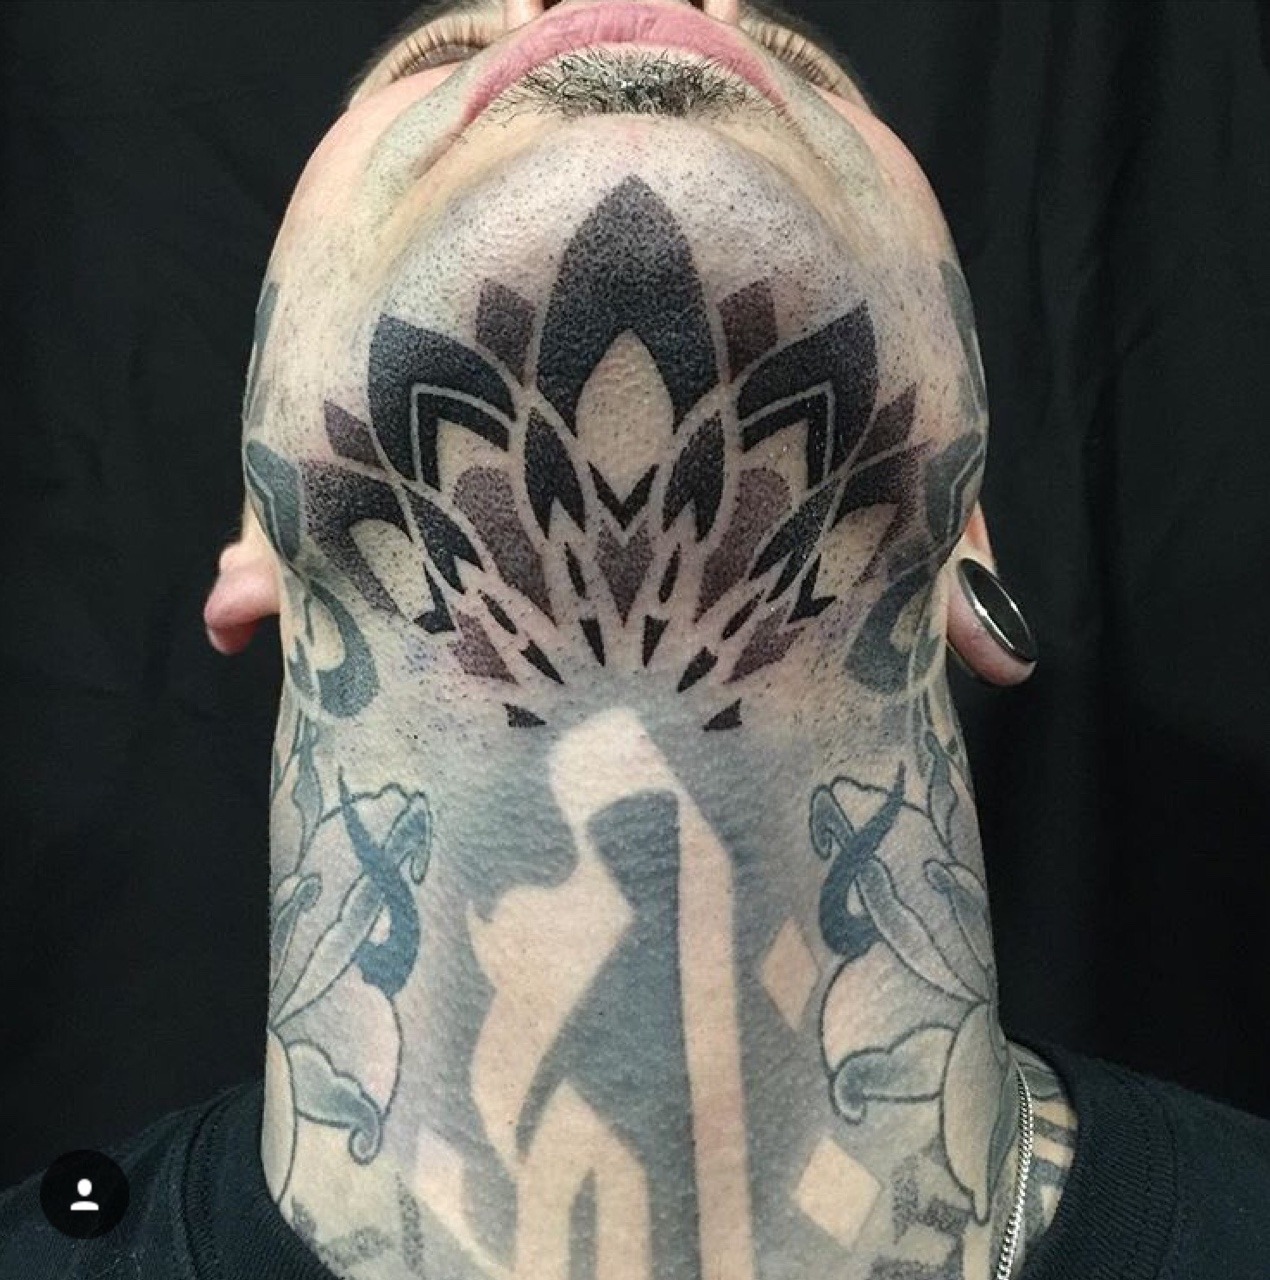 Ink Master on Twitter StevenTeffts under chin tattoo is solid bright  and symmetrical Killer job InkMaster httpstco59EByTV6R6  Twitter